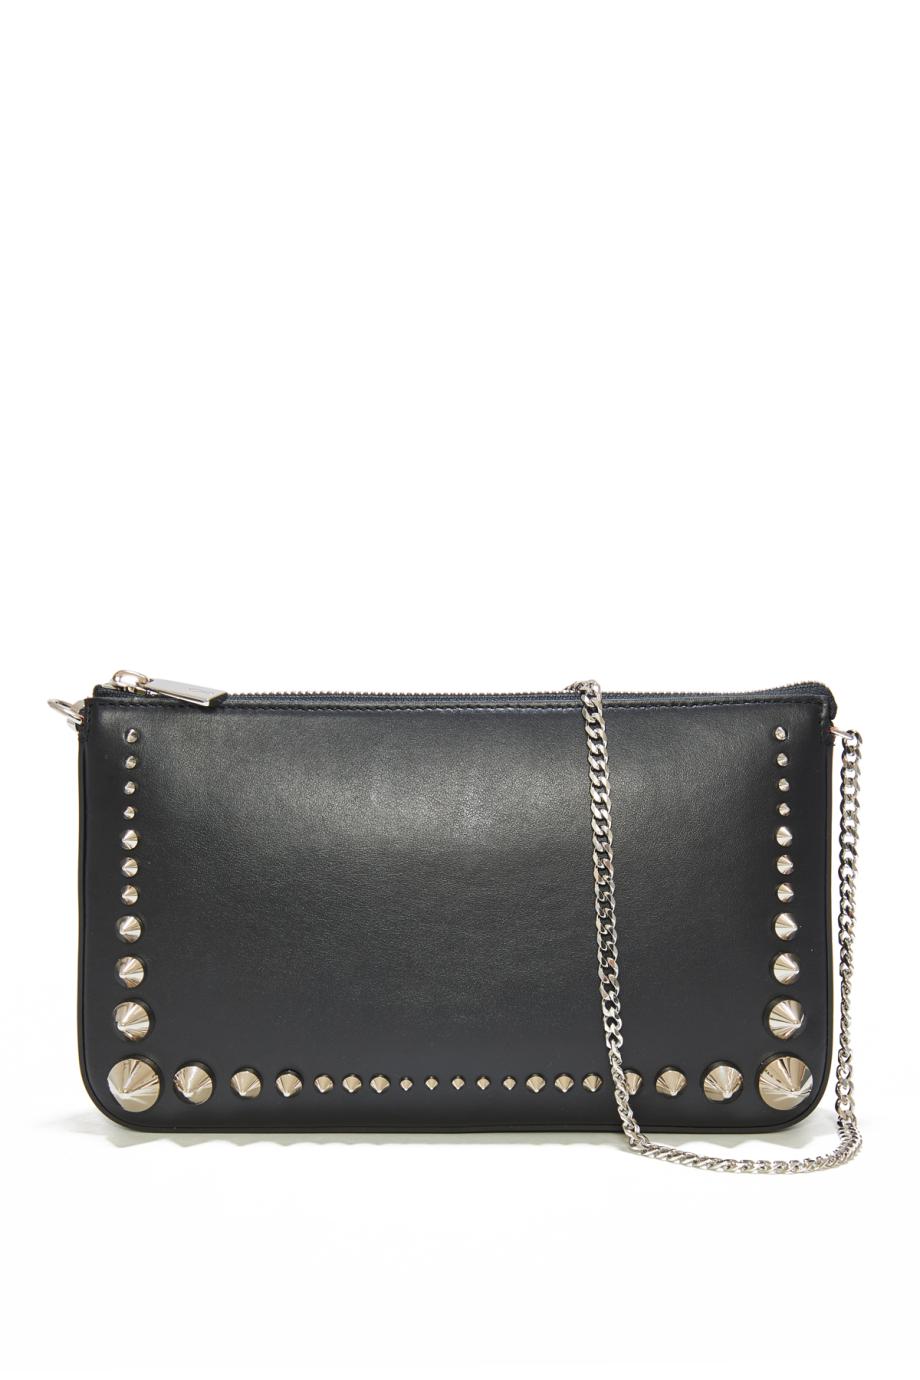 Loubila embellished leather clutch 